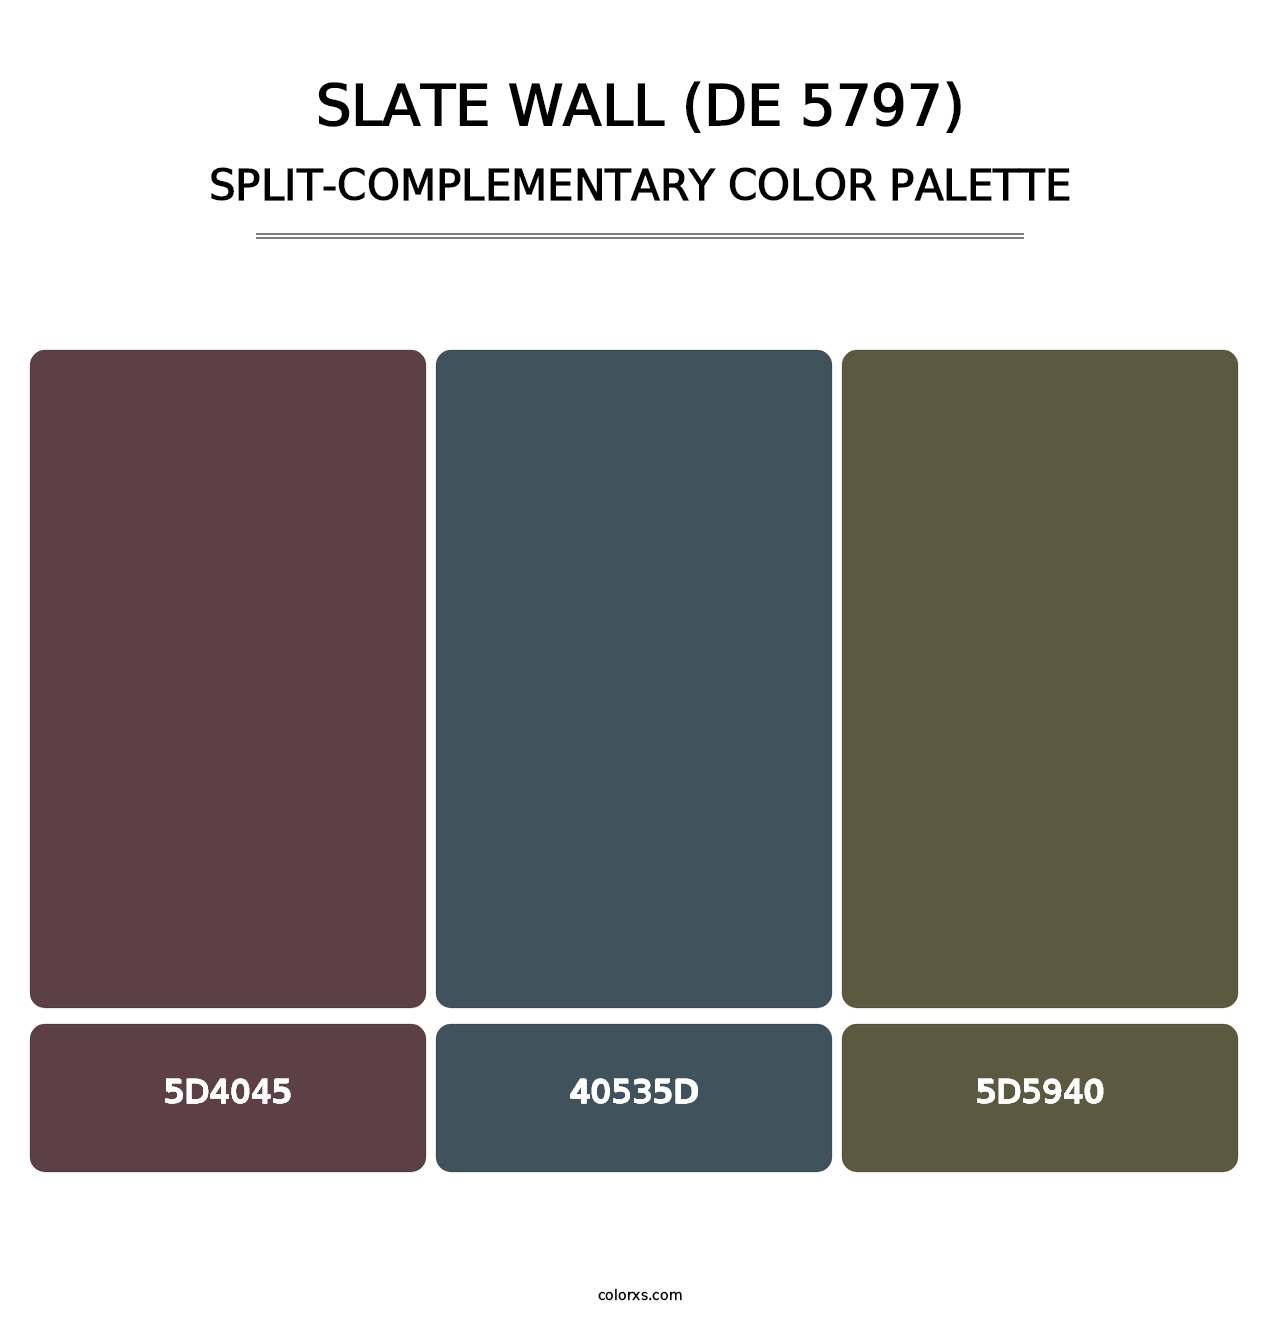 Slate Wall (DE 5797) - Split-Complementary Color Palette